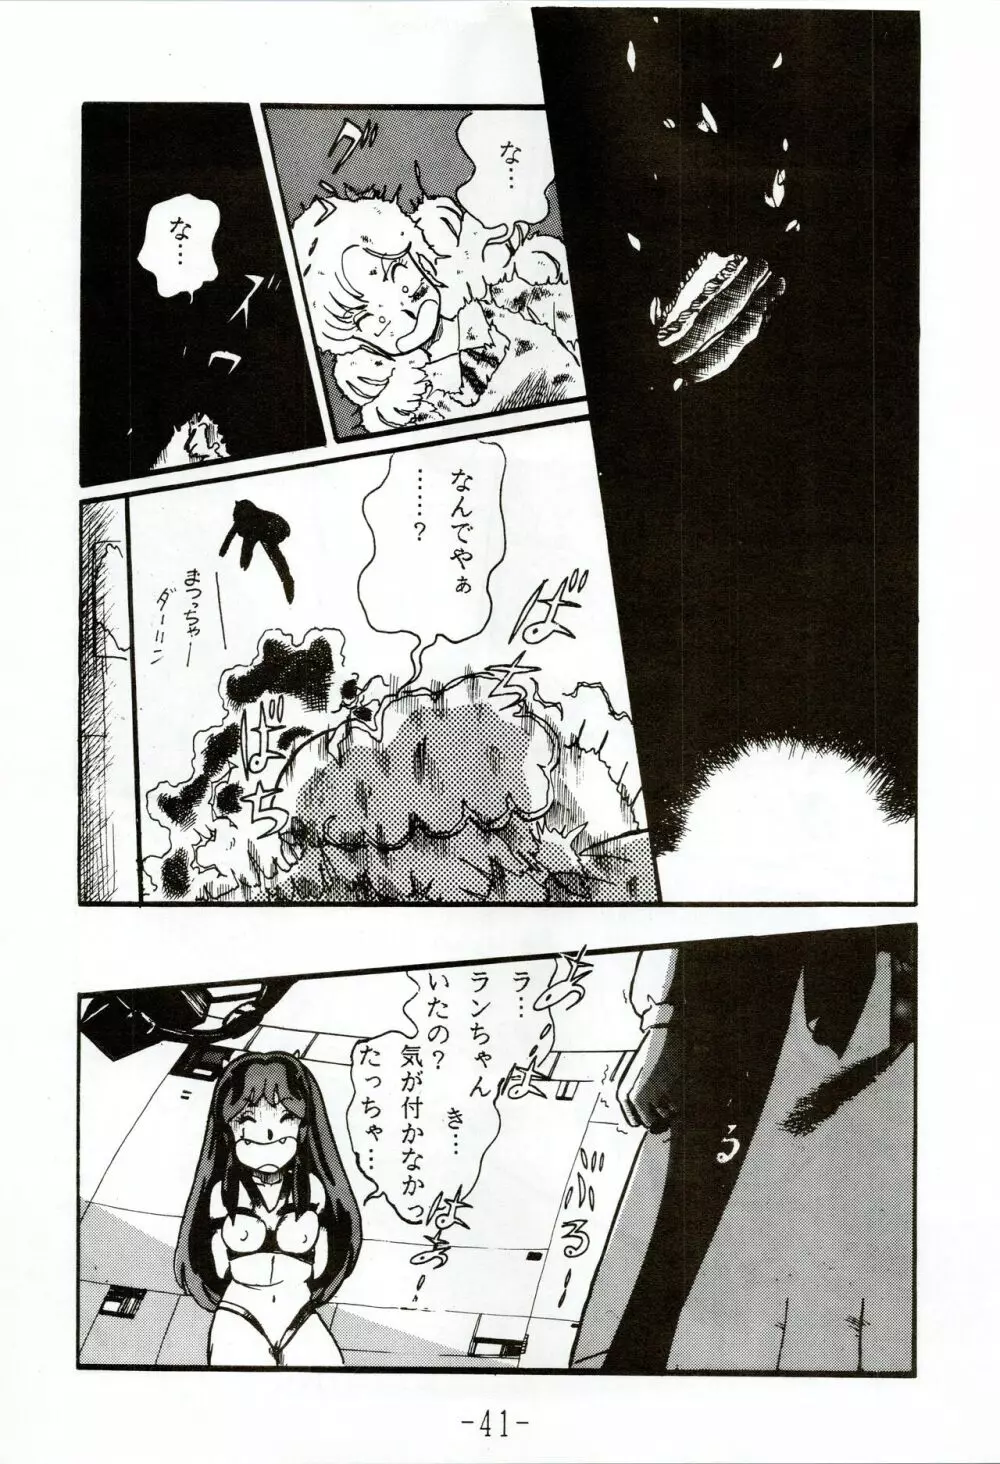 甲冑伝説 - page41